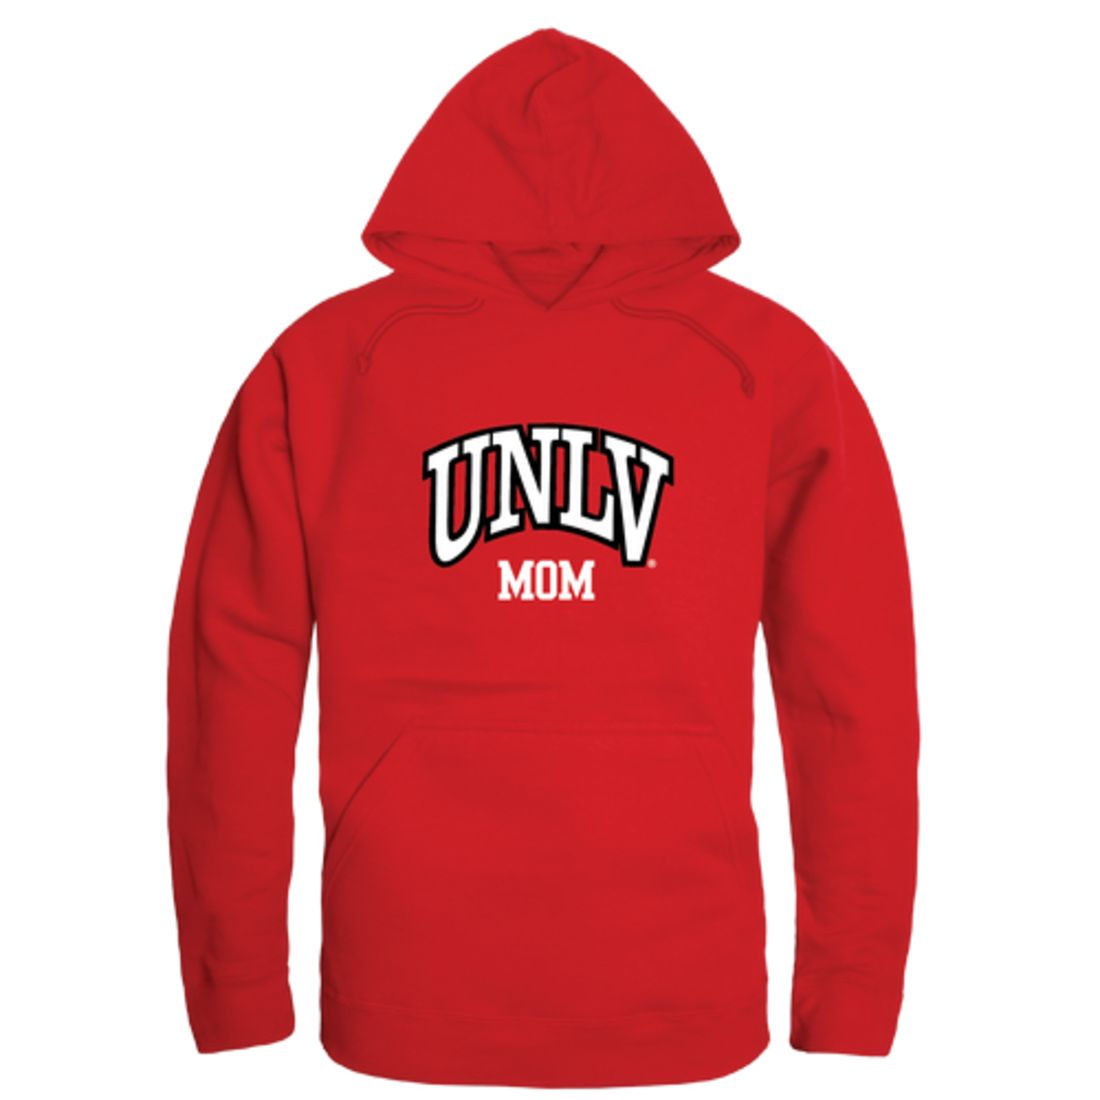 UNLV University of Nevada Las Vegas Rebels Mom Fleece Hoodie Sweatshirts Heather Grey-Campus-Wardrobe